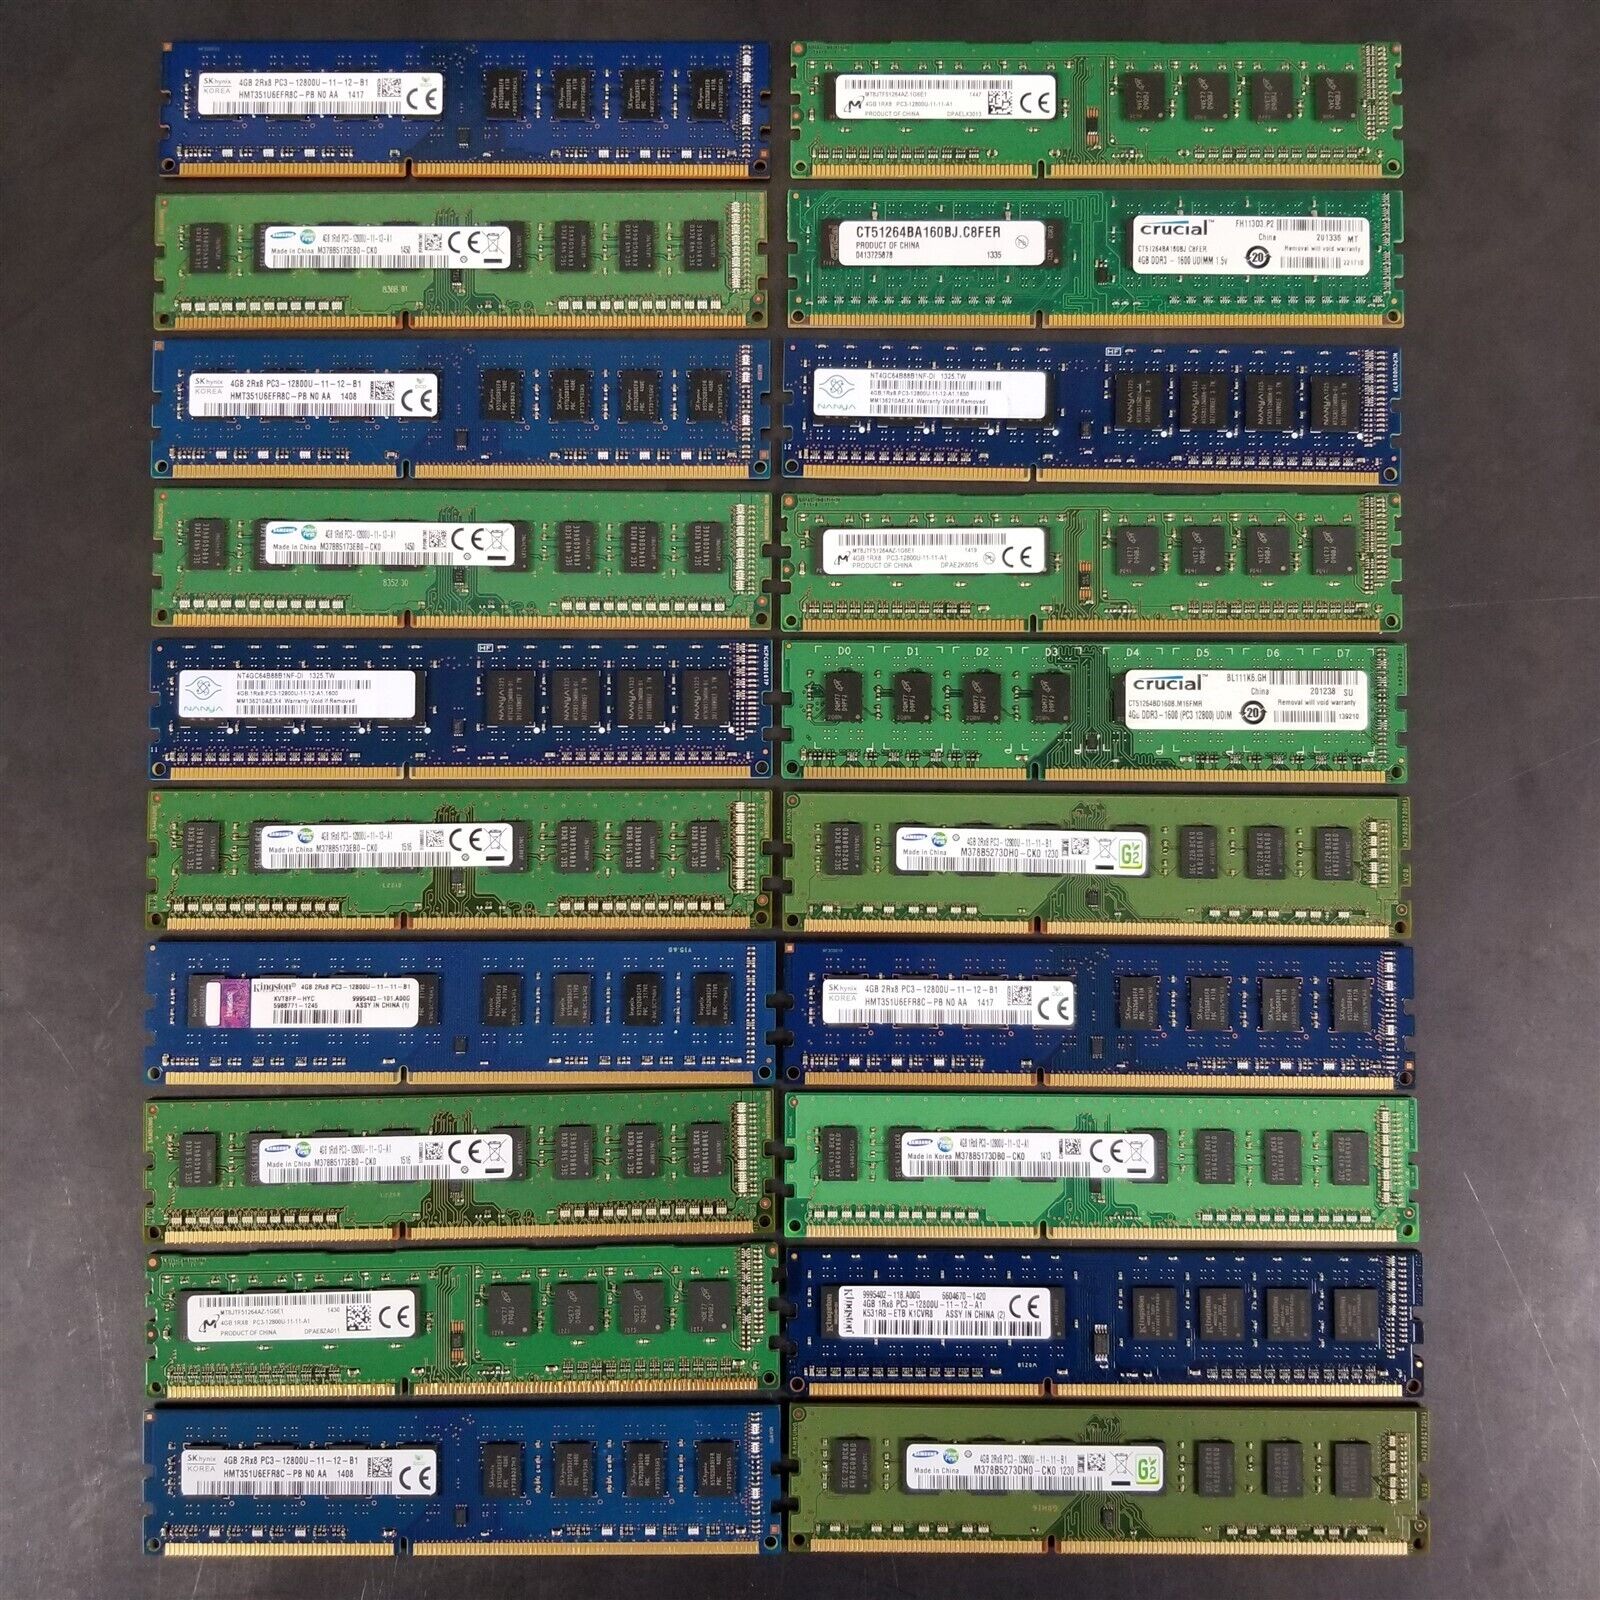 Lot of 20 Mixed Major Brands 4GB PC3-12800U DDR3 1600MHz Desktop RAM Tested